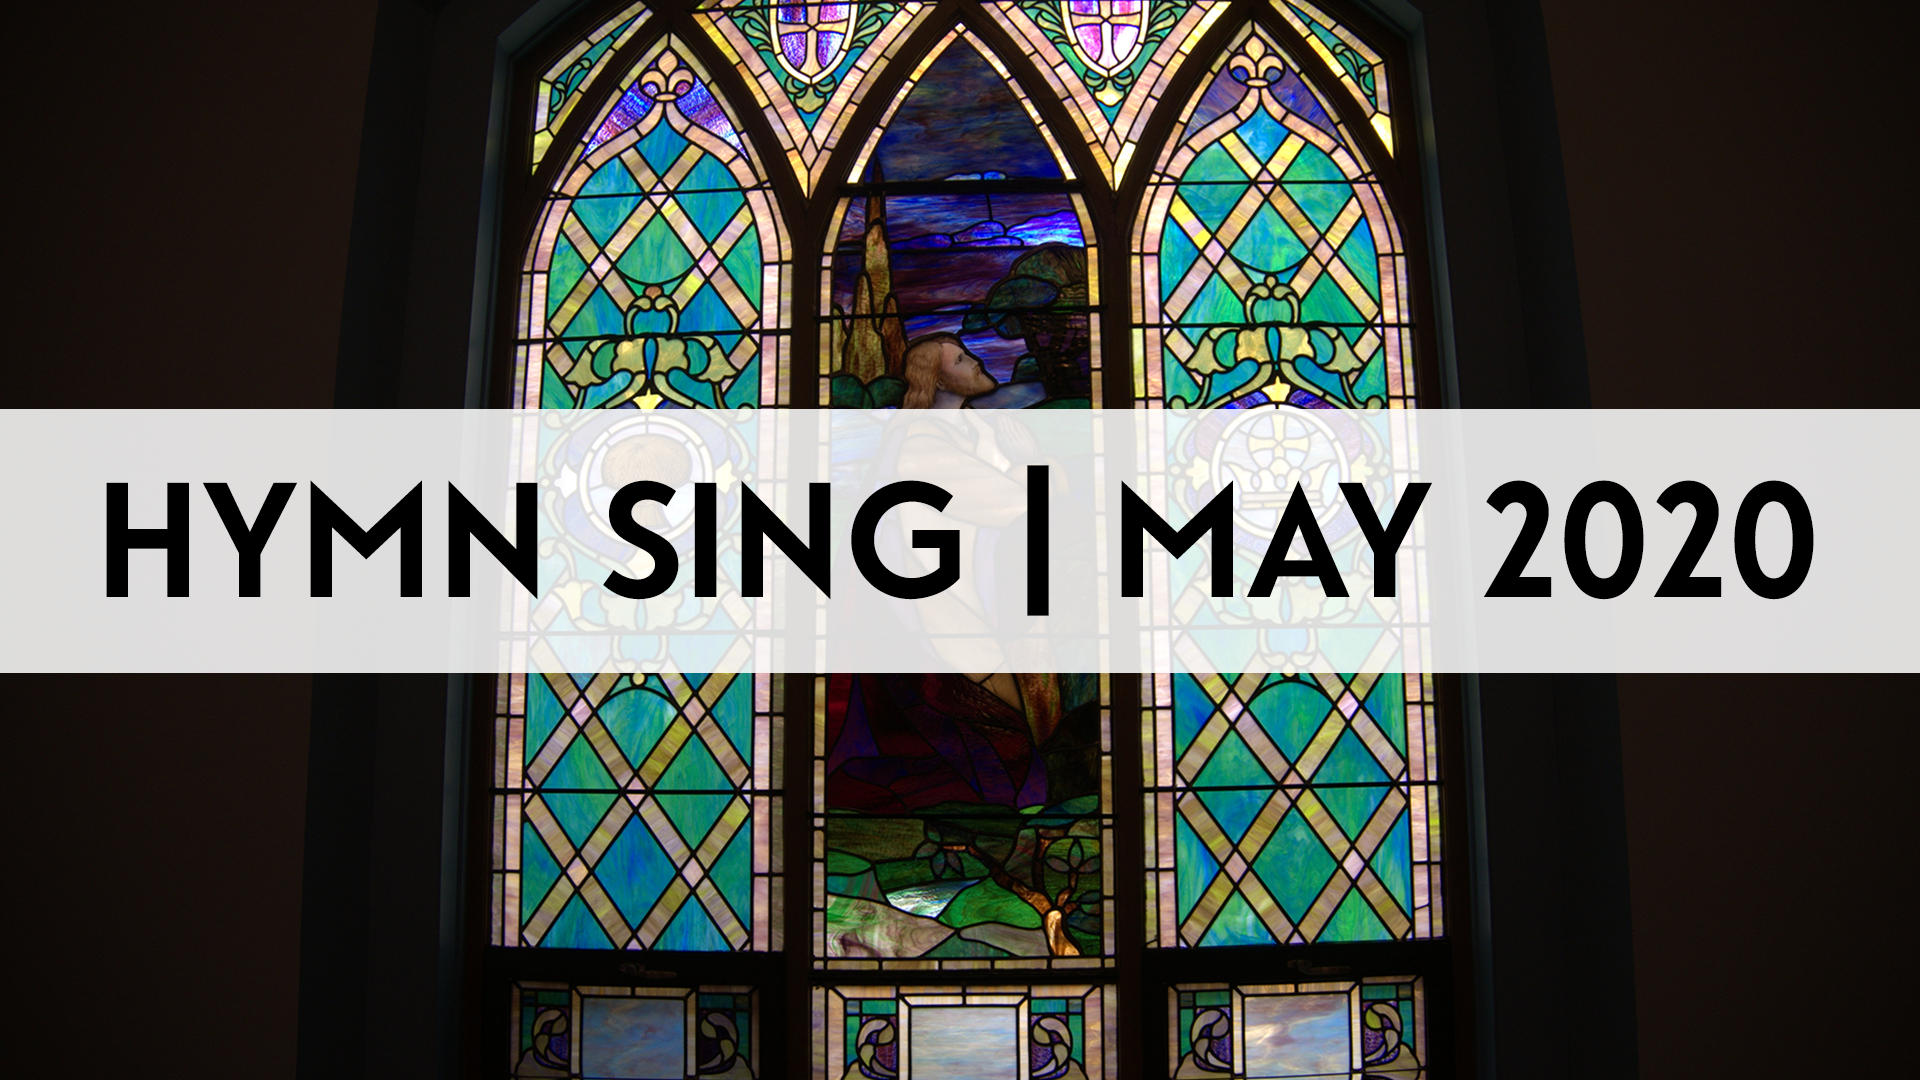 Hymn Sing (May 2020) Image